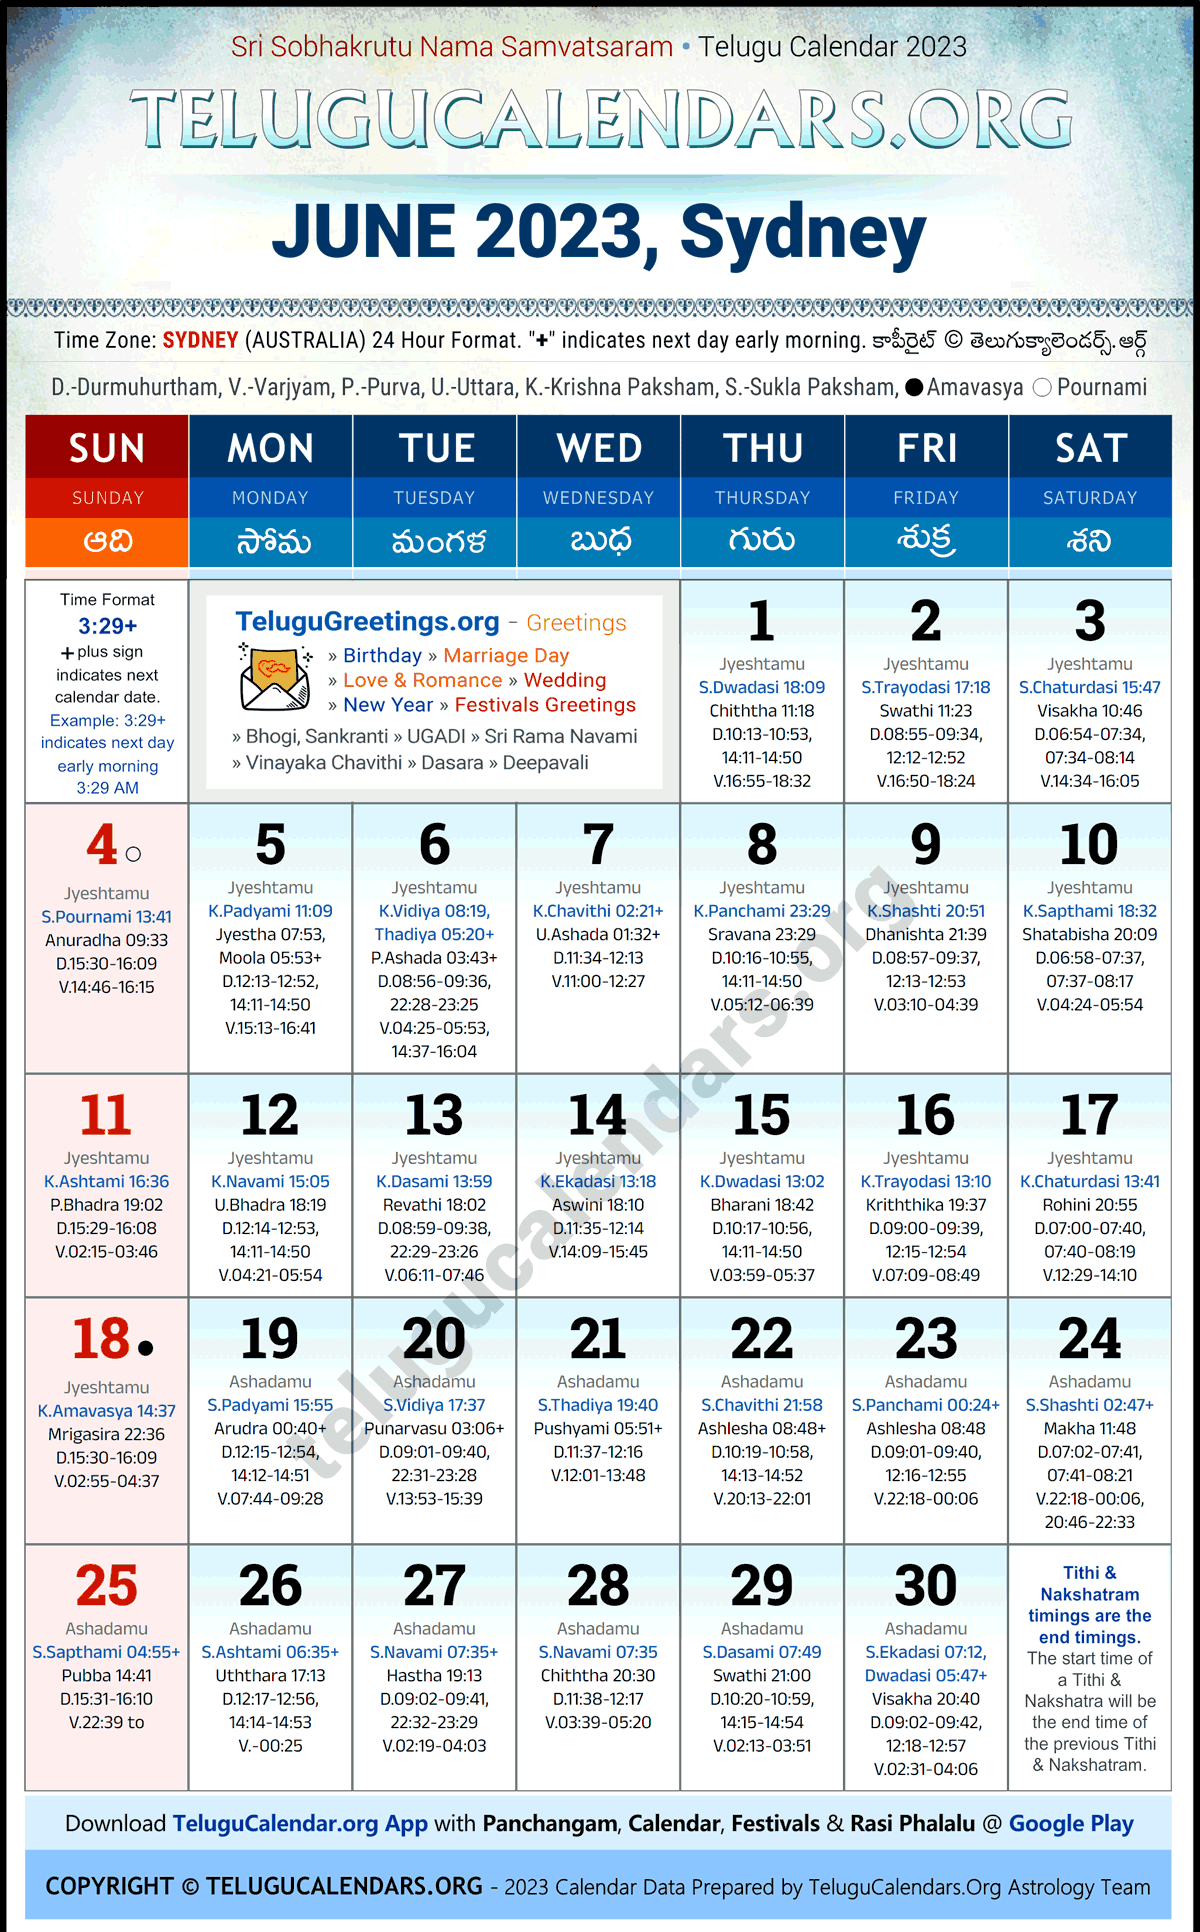 Telugu Calendar 2023 June Festivals for Sydney